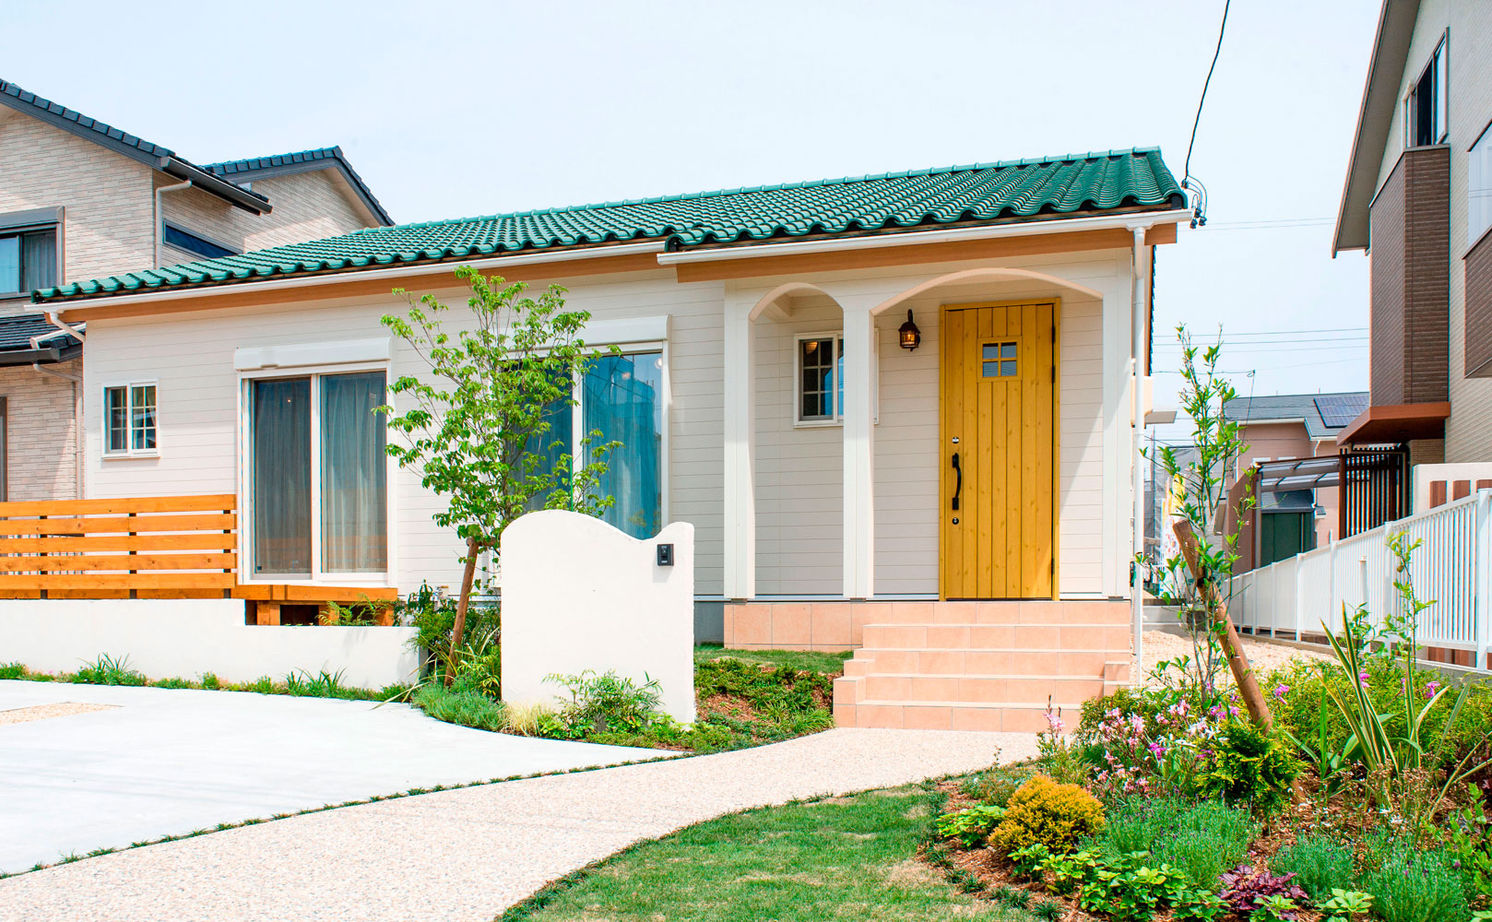 Suumo 1000万円台 平屋 緑の屋根と黄色のドアが可愛い平屋 子育てを考えた可変性あるプランと開放感に感激 のこのこのいえ の建築実例詳細 注文住宅